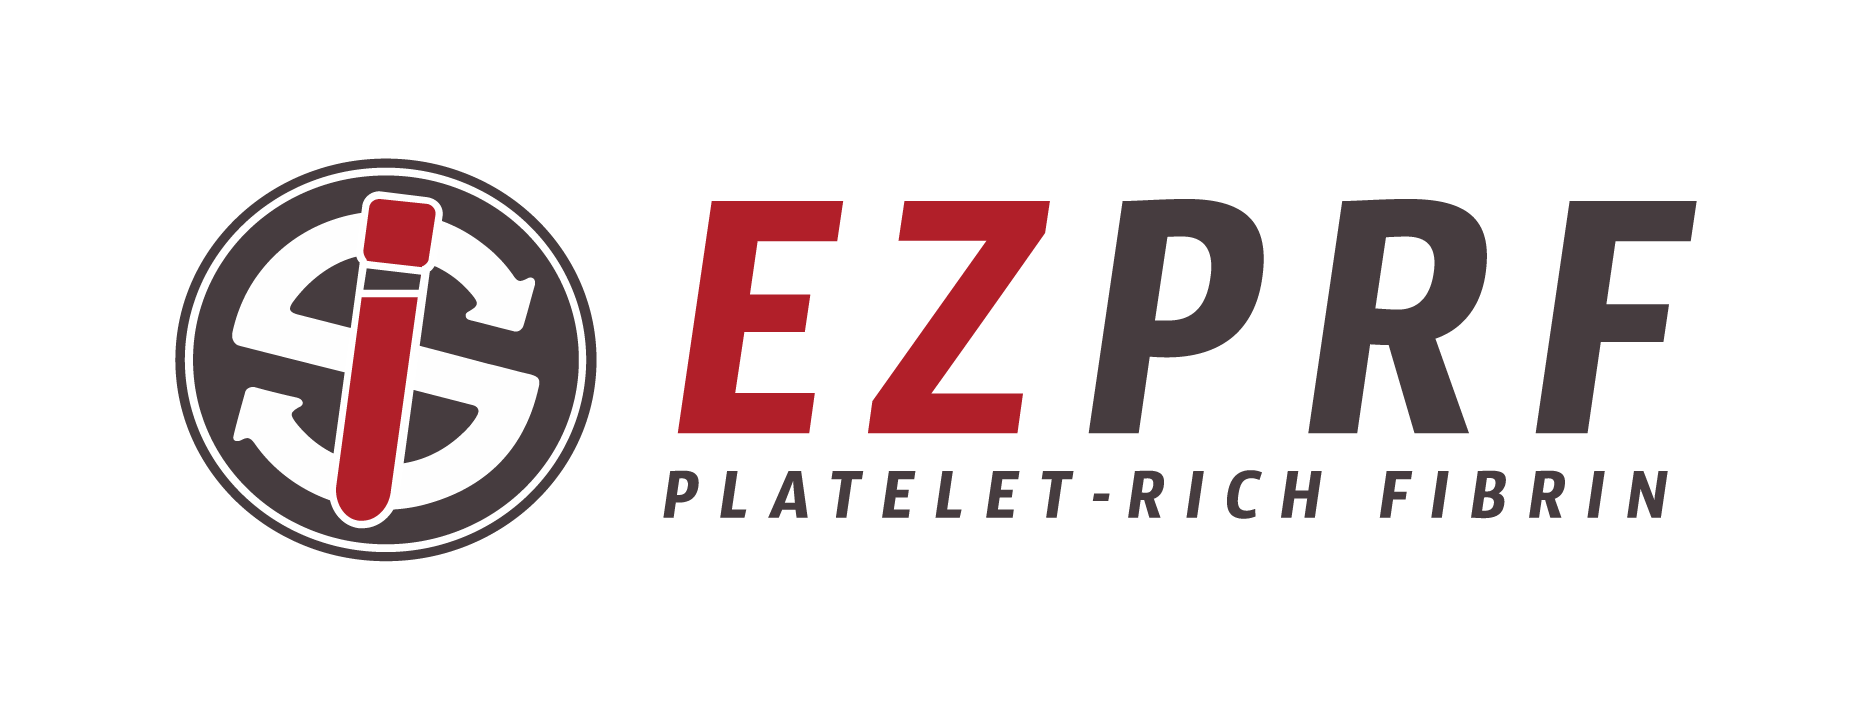 ezprf_logo